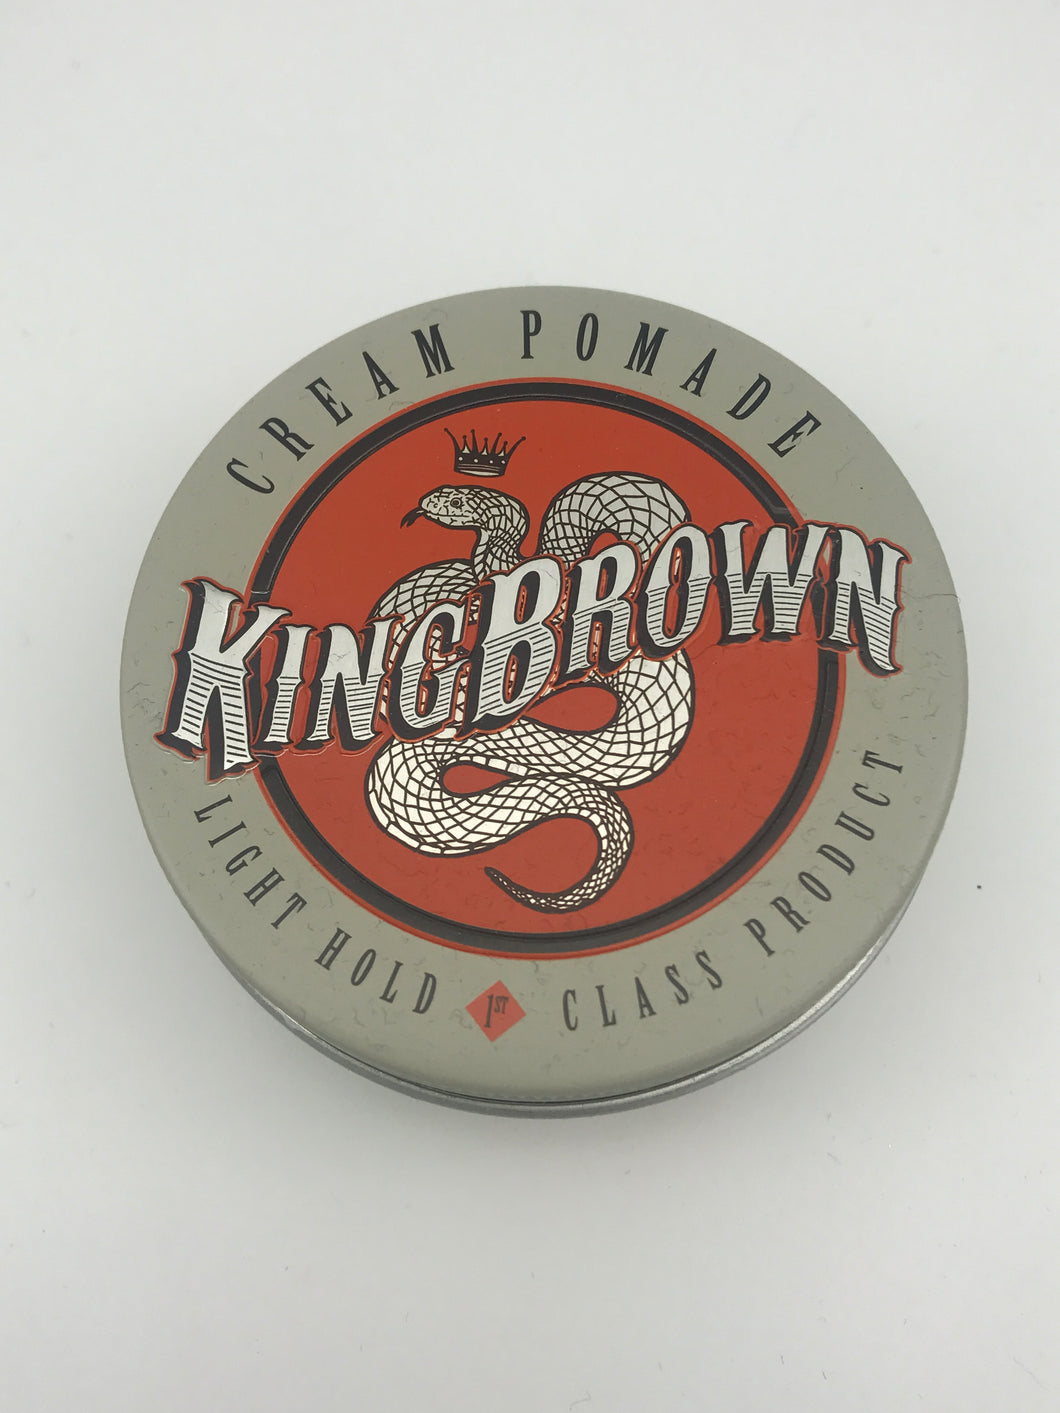 Kingbrown Cream Pomade